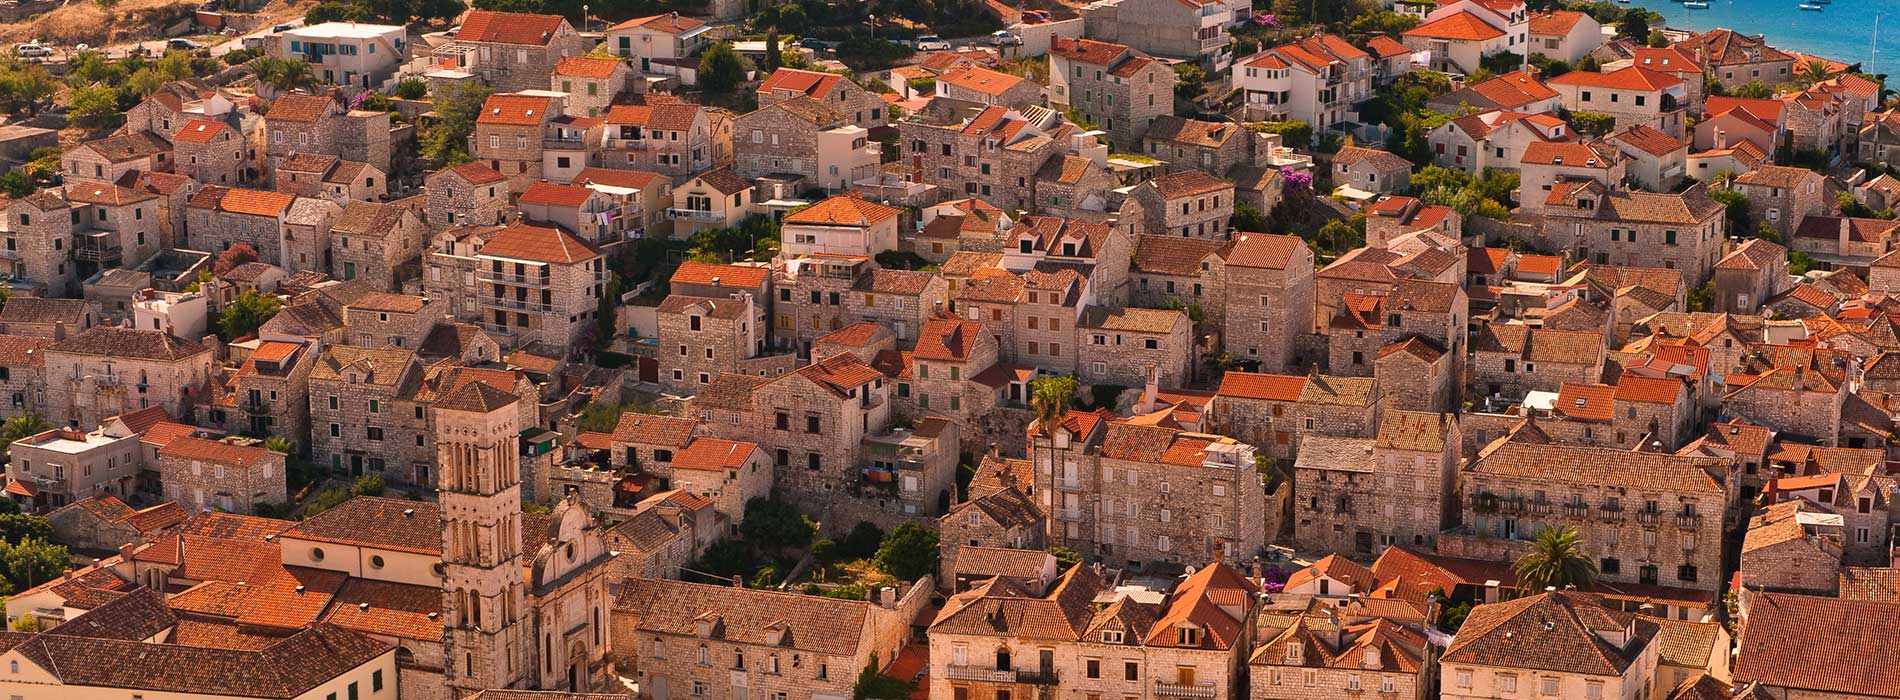 Old Adriatic island town Hvar.jpg